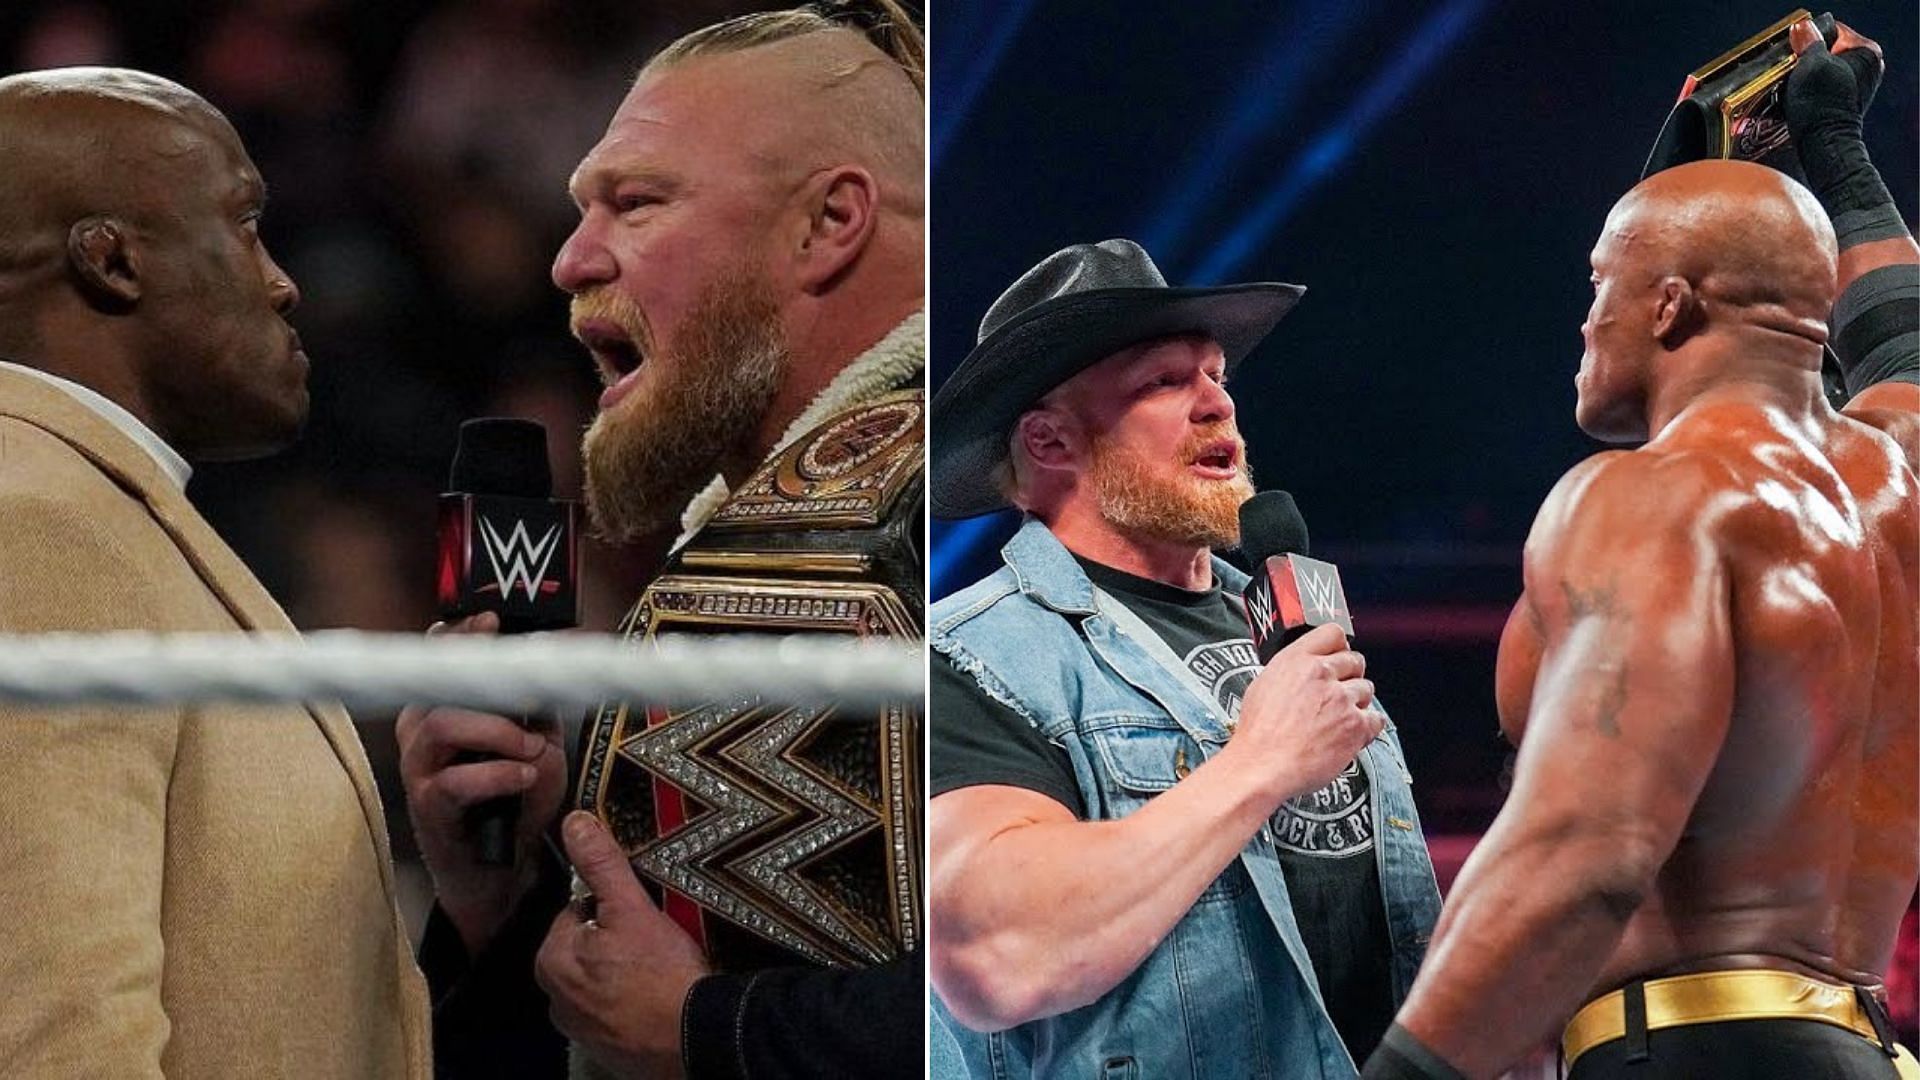 Brock Lesnar vs. Bobby Lashley III is inevitable.